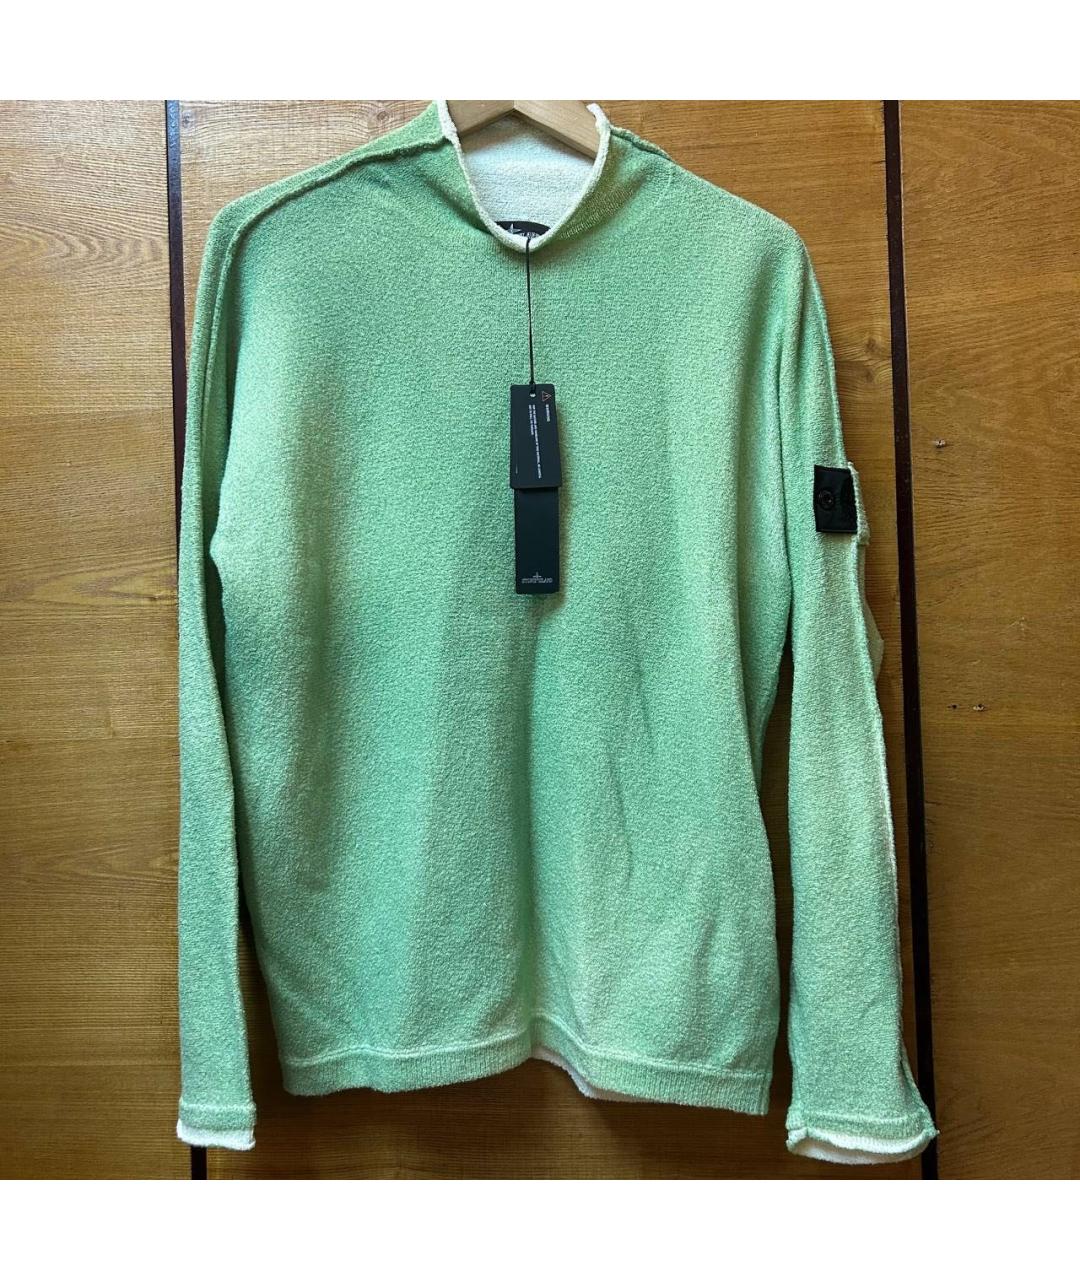 STONE ISLAND SHADOW PROJECT Зеленый хлопковый джемпер / свитер, фото 4